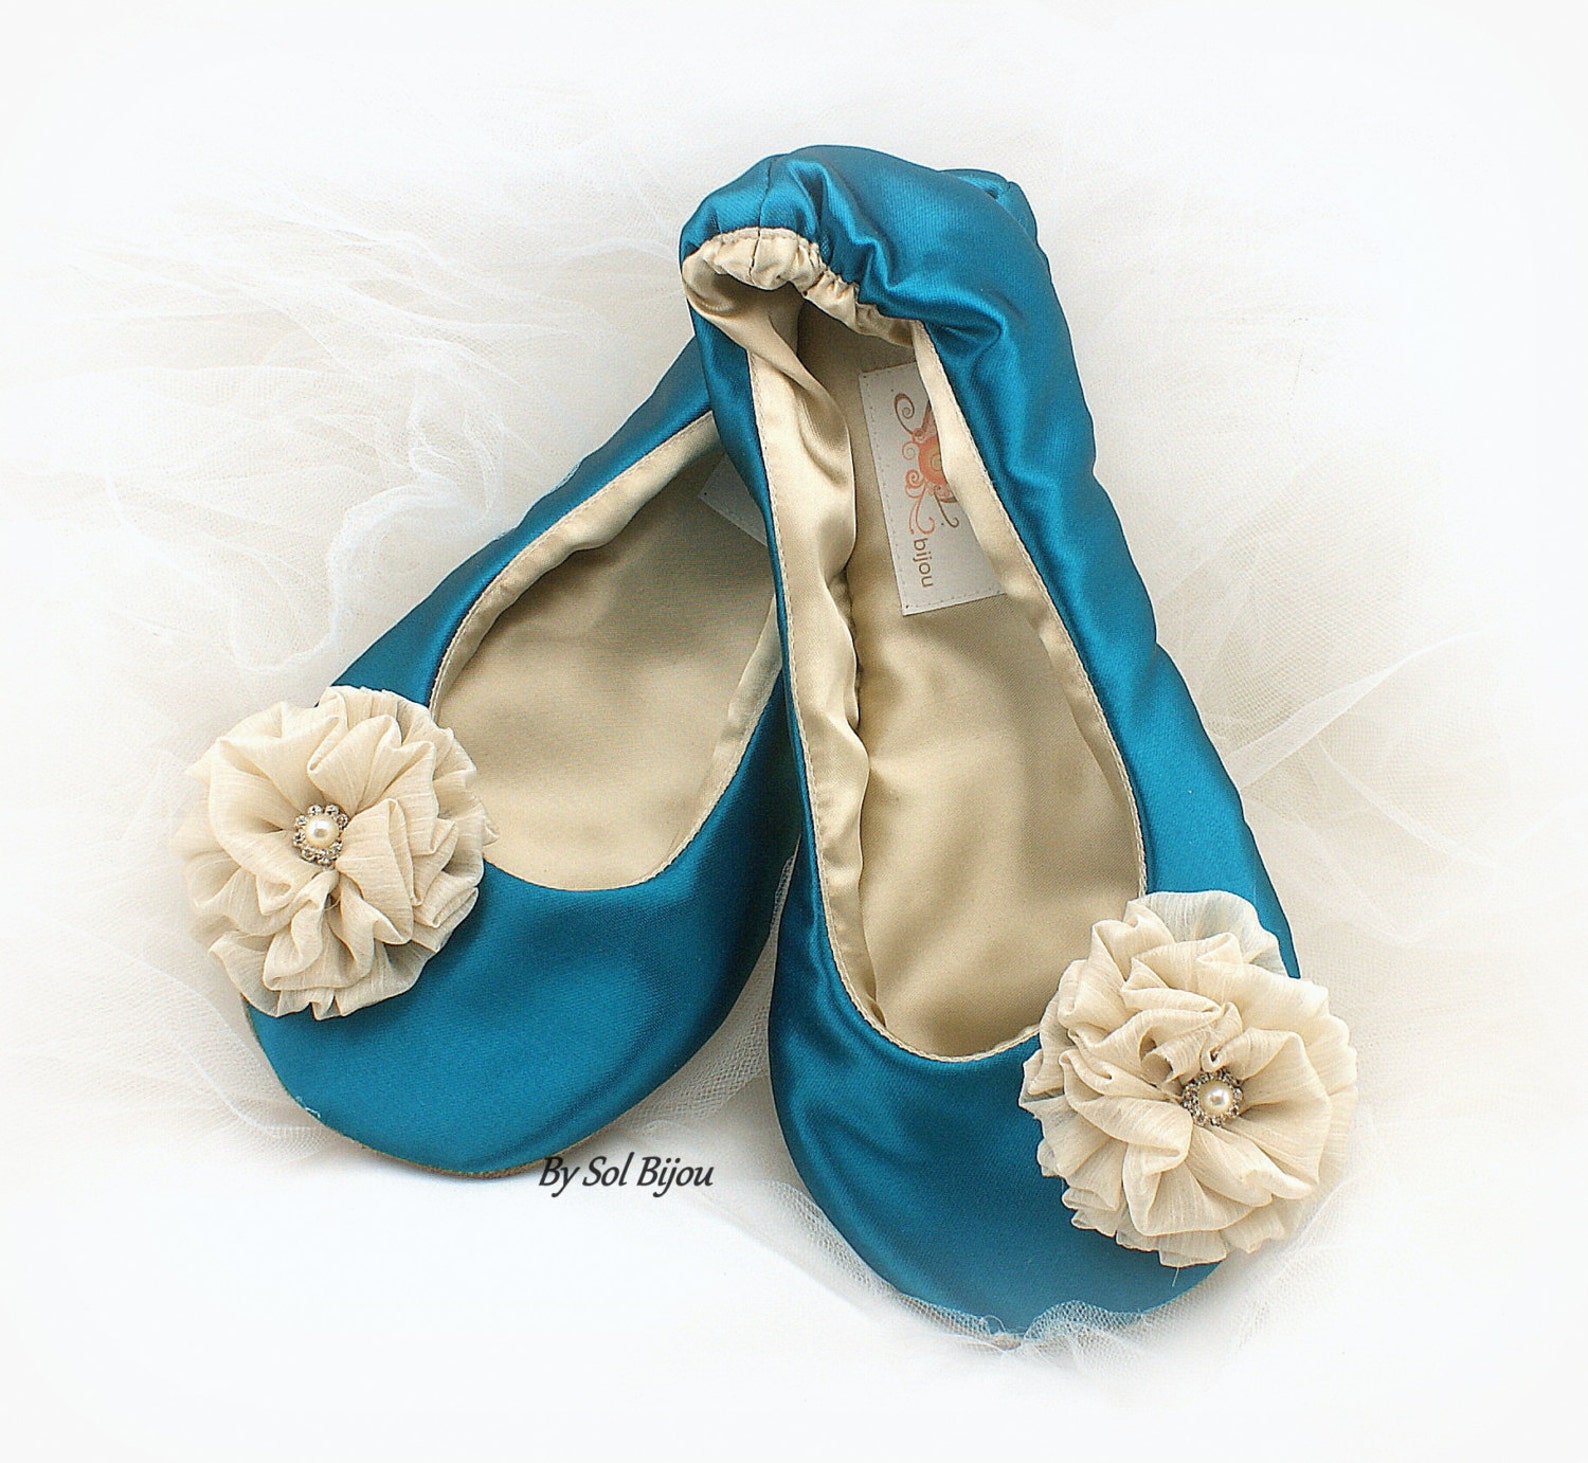 teal ballet shoes